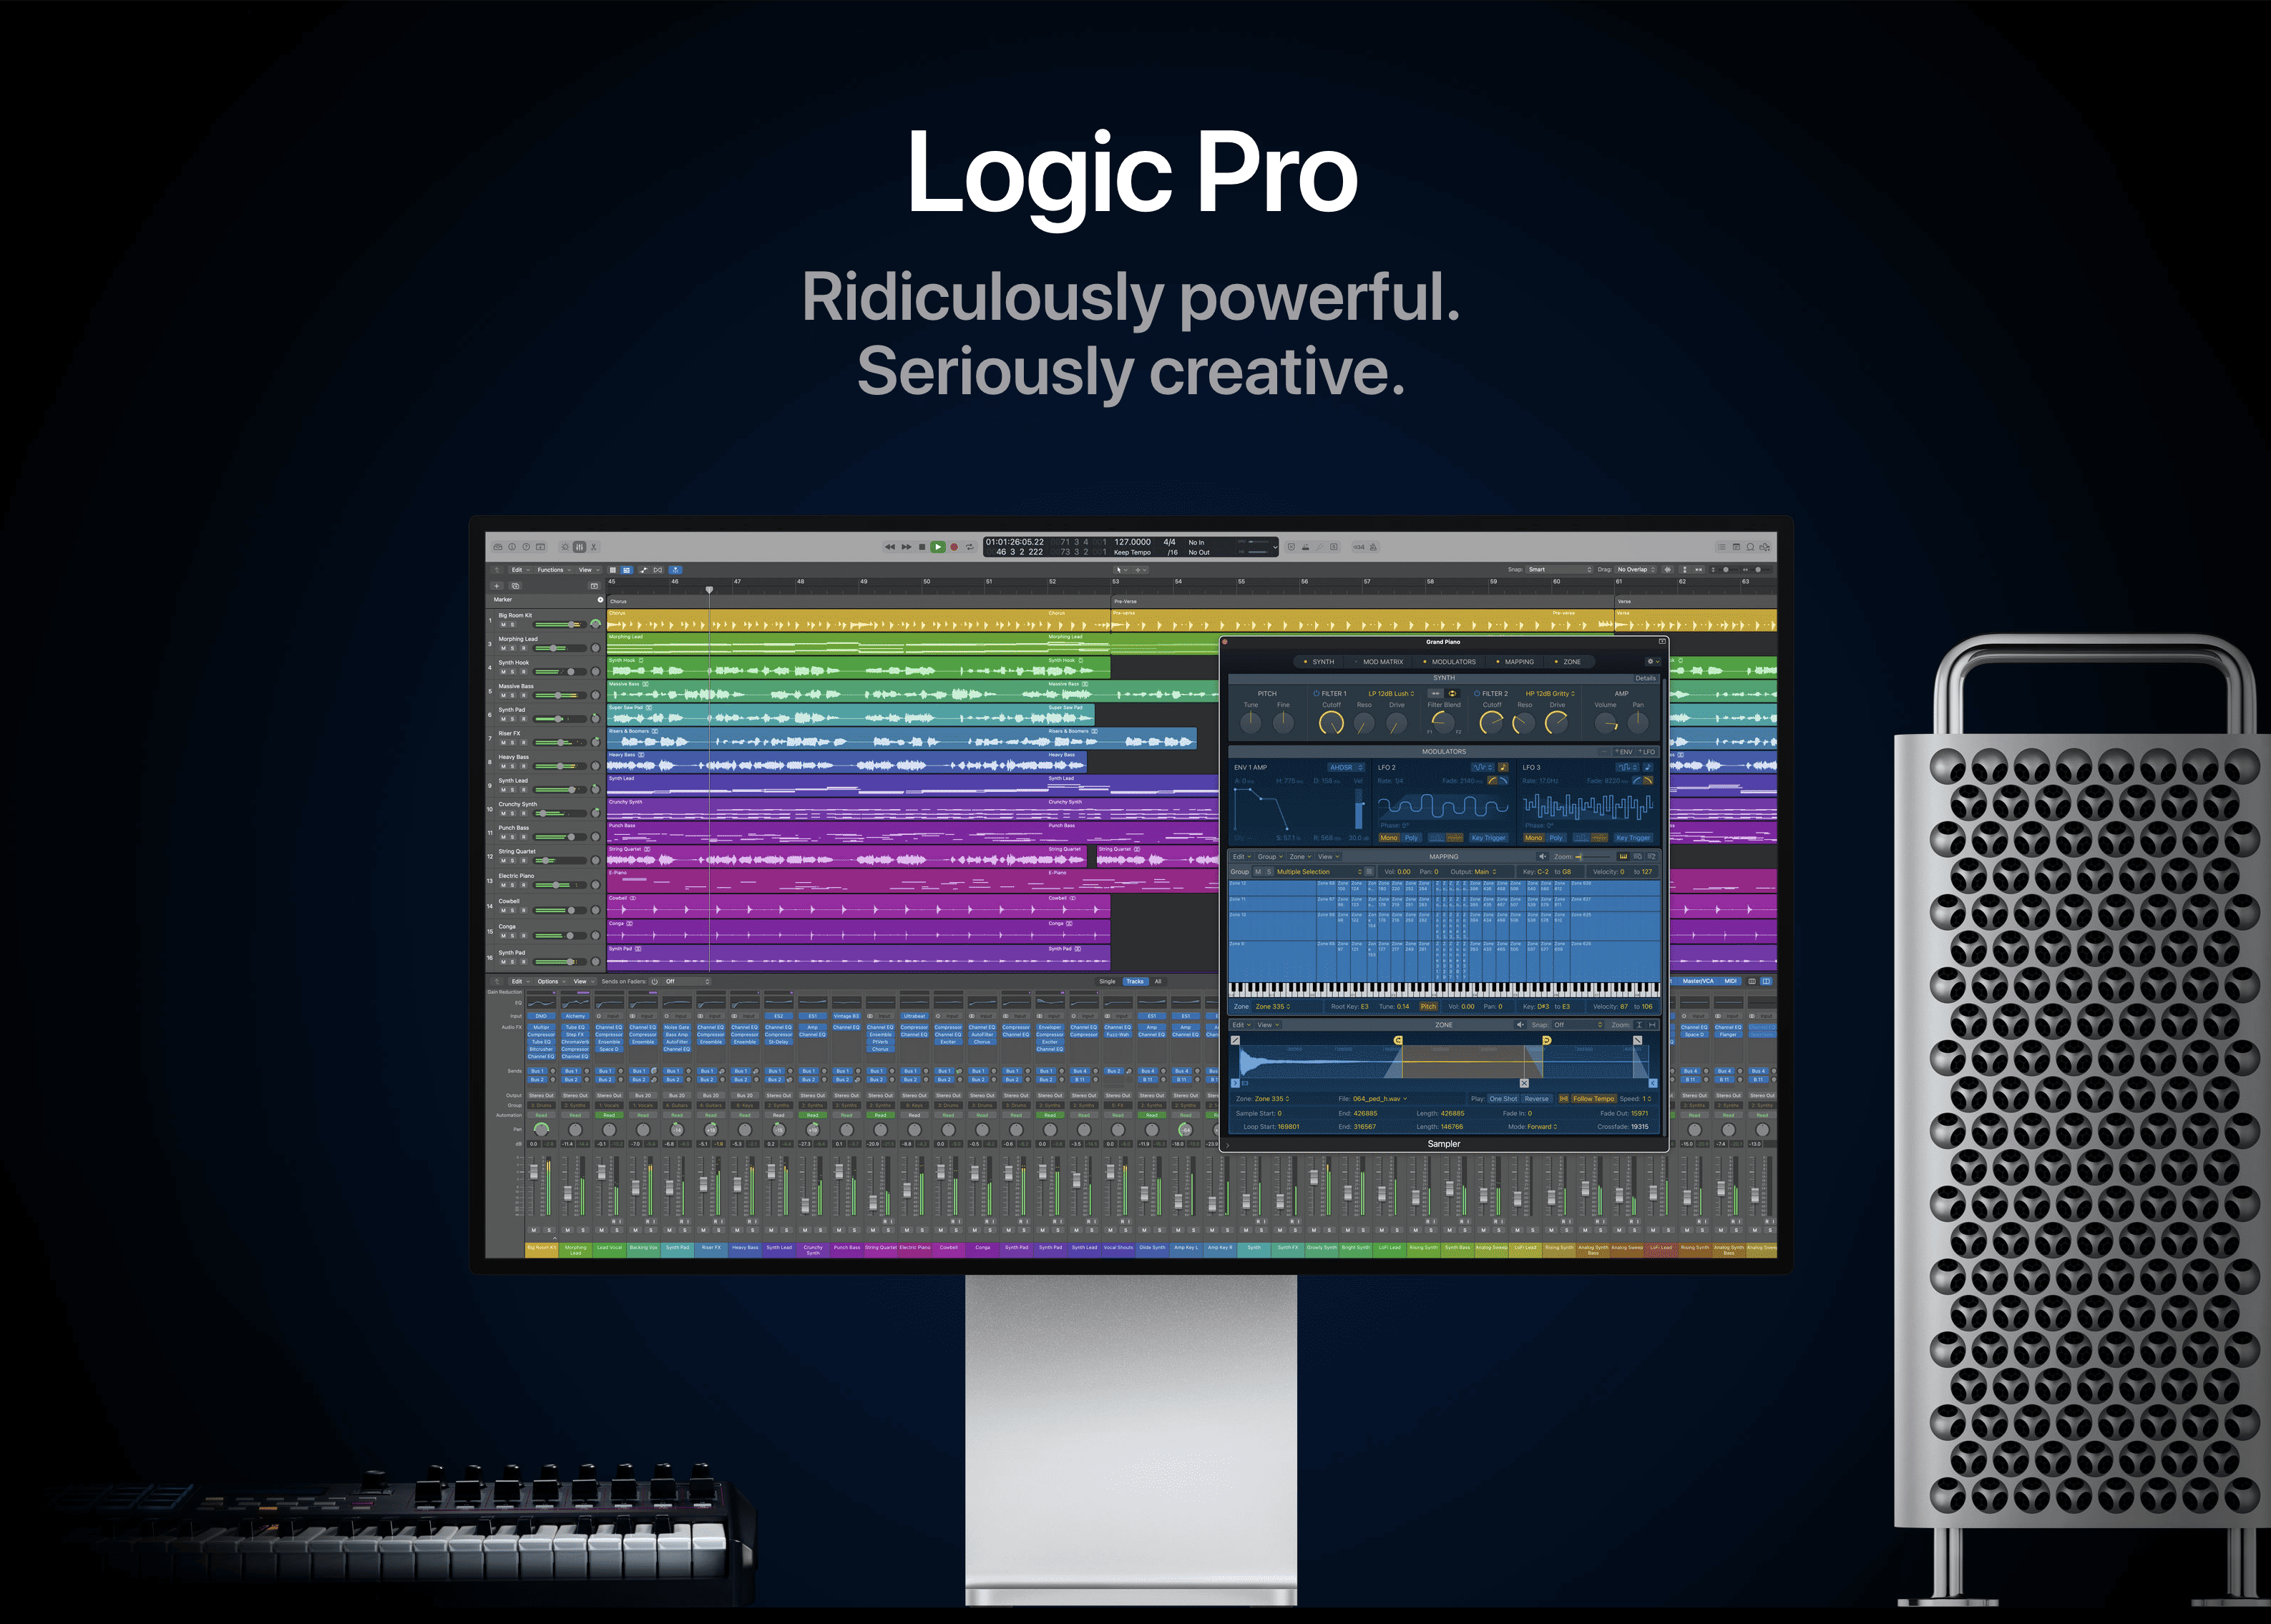 Logic Pro X On Computer Image Credits: Apple